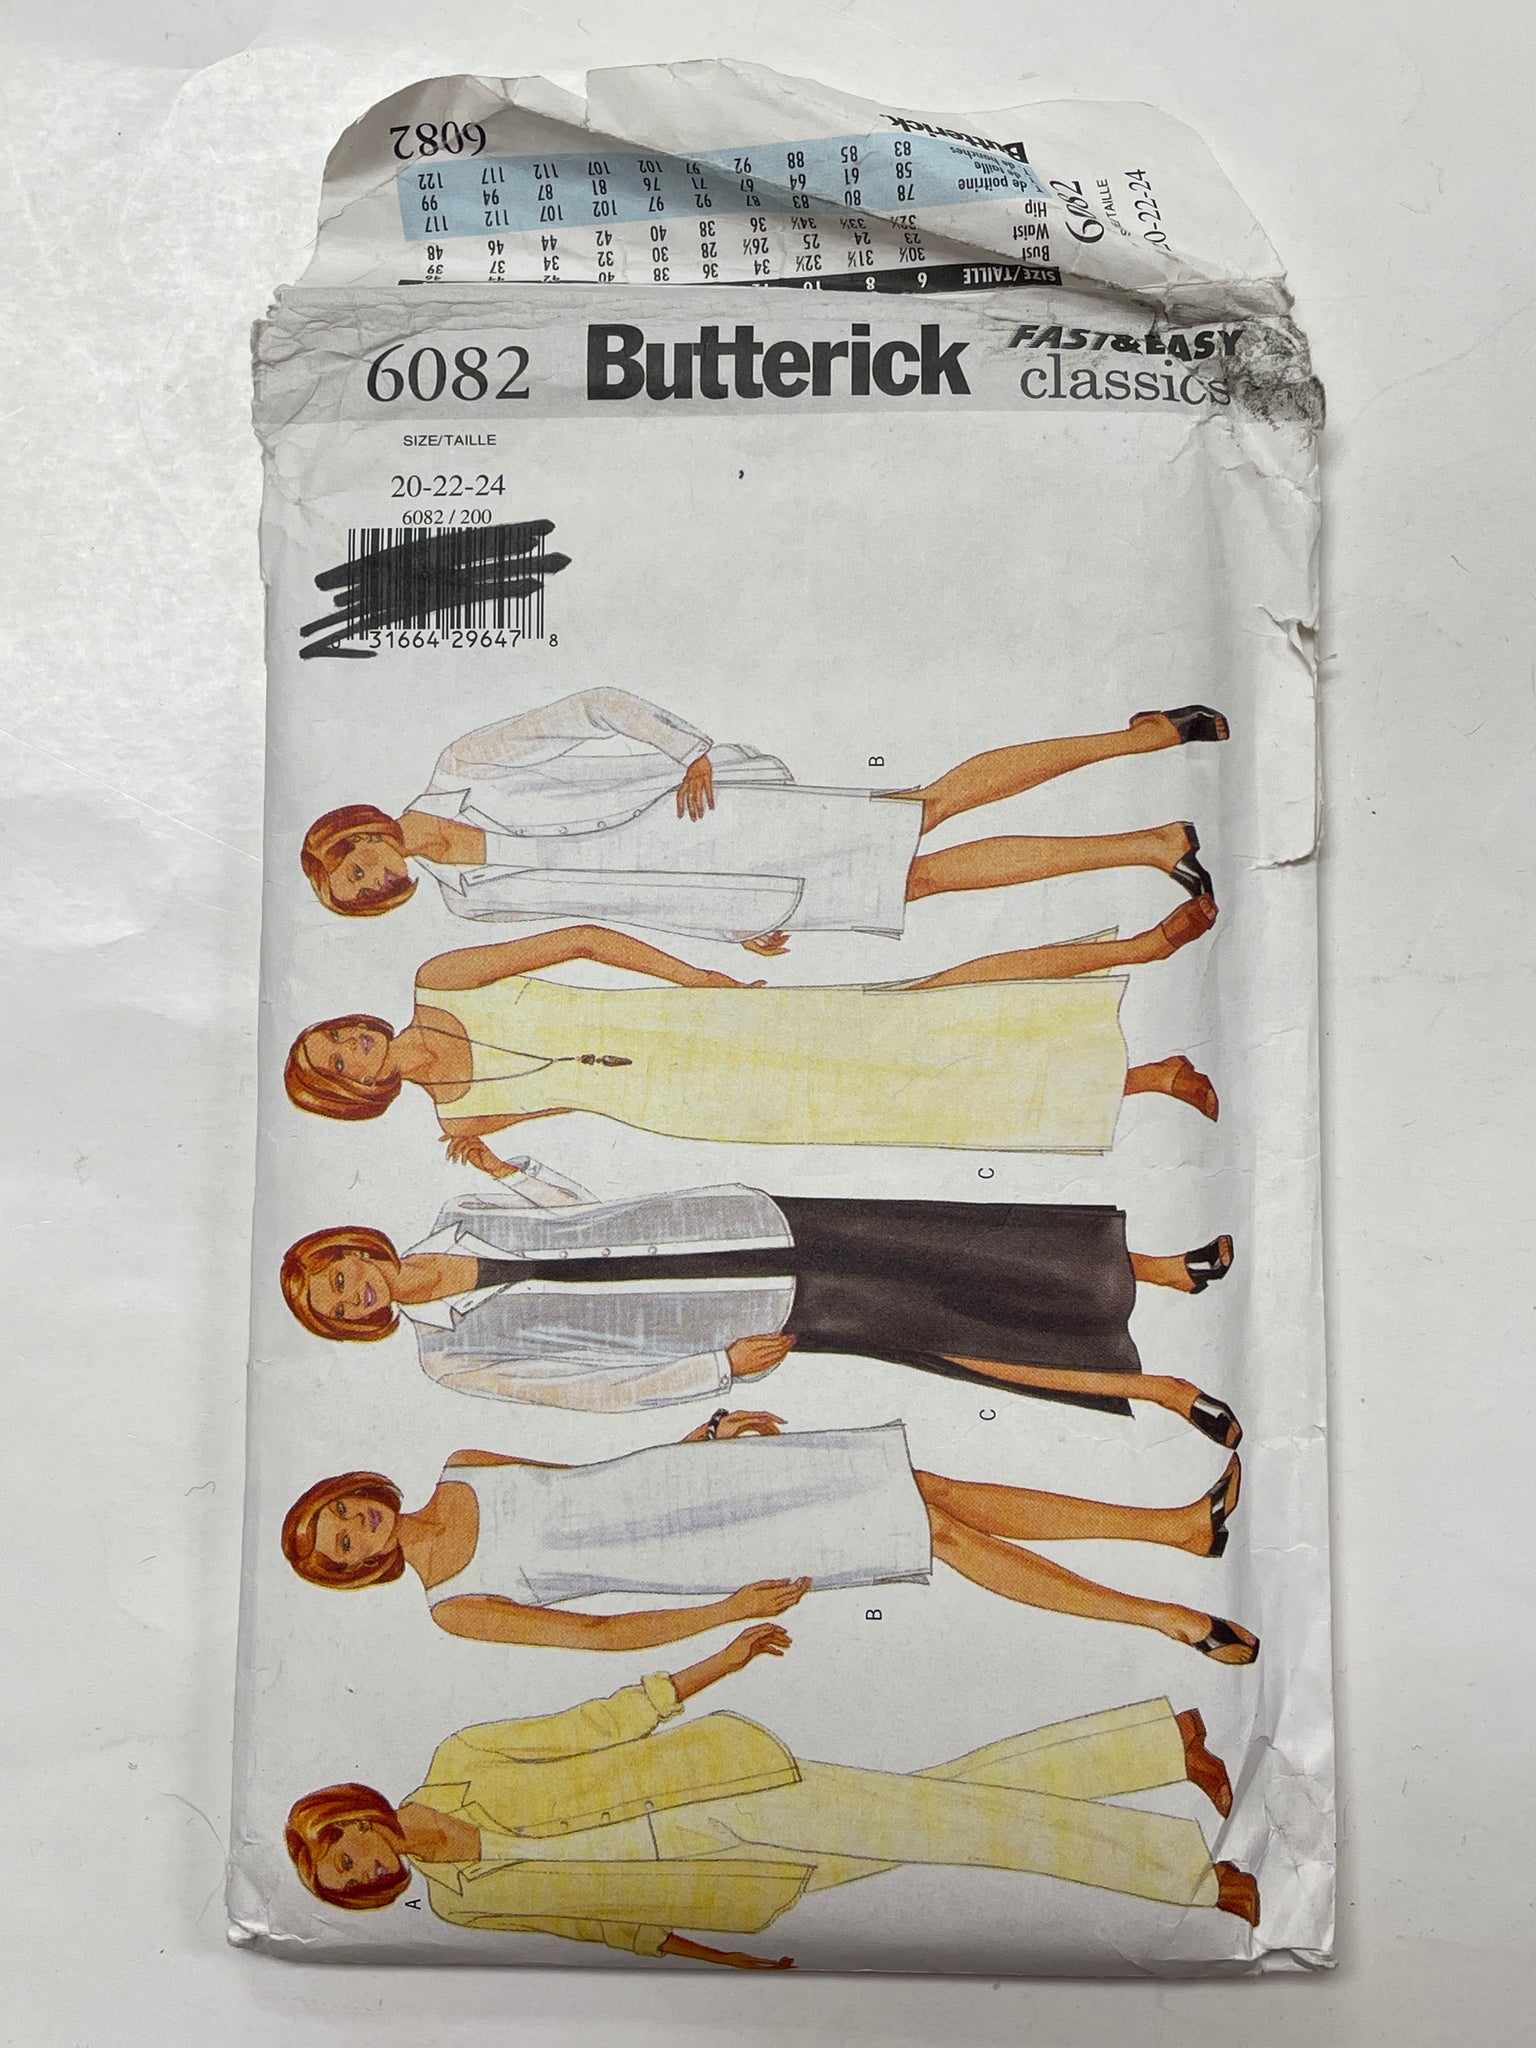 1999 Butterick 6082 Pattern - Dress, Shirt, Top, Pants FACTORY FOLDED